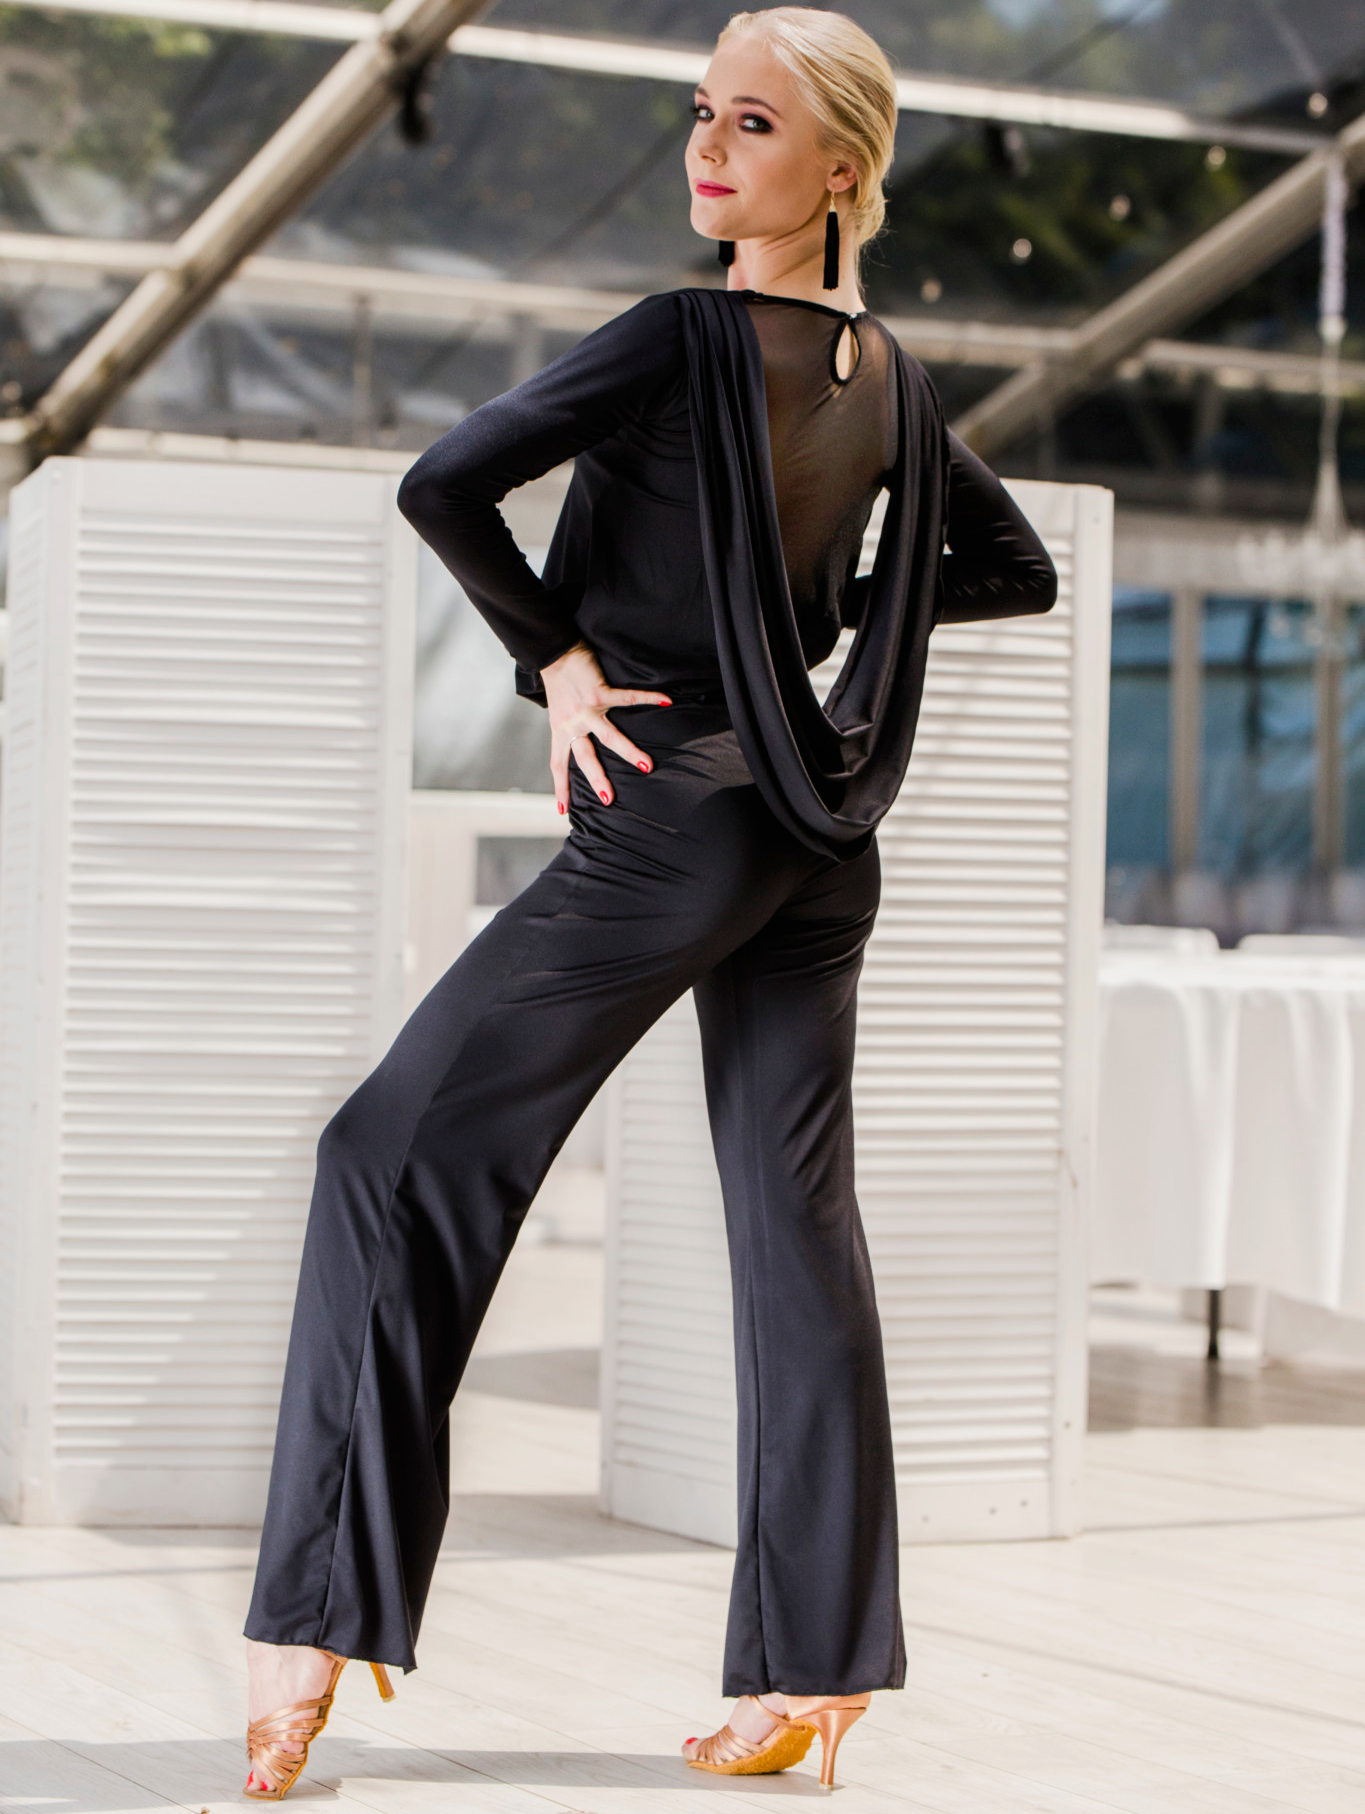 Senga Dancewear FORRO Black Long Sleeve V-Neck Jumpsuit with Wide Leg Pants, Mesh Back, and Sash PRA 992 in Stock